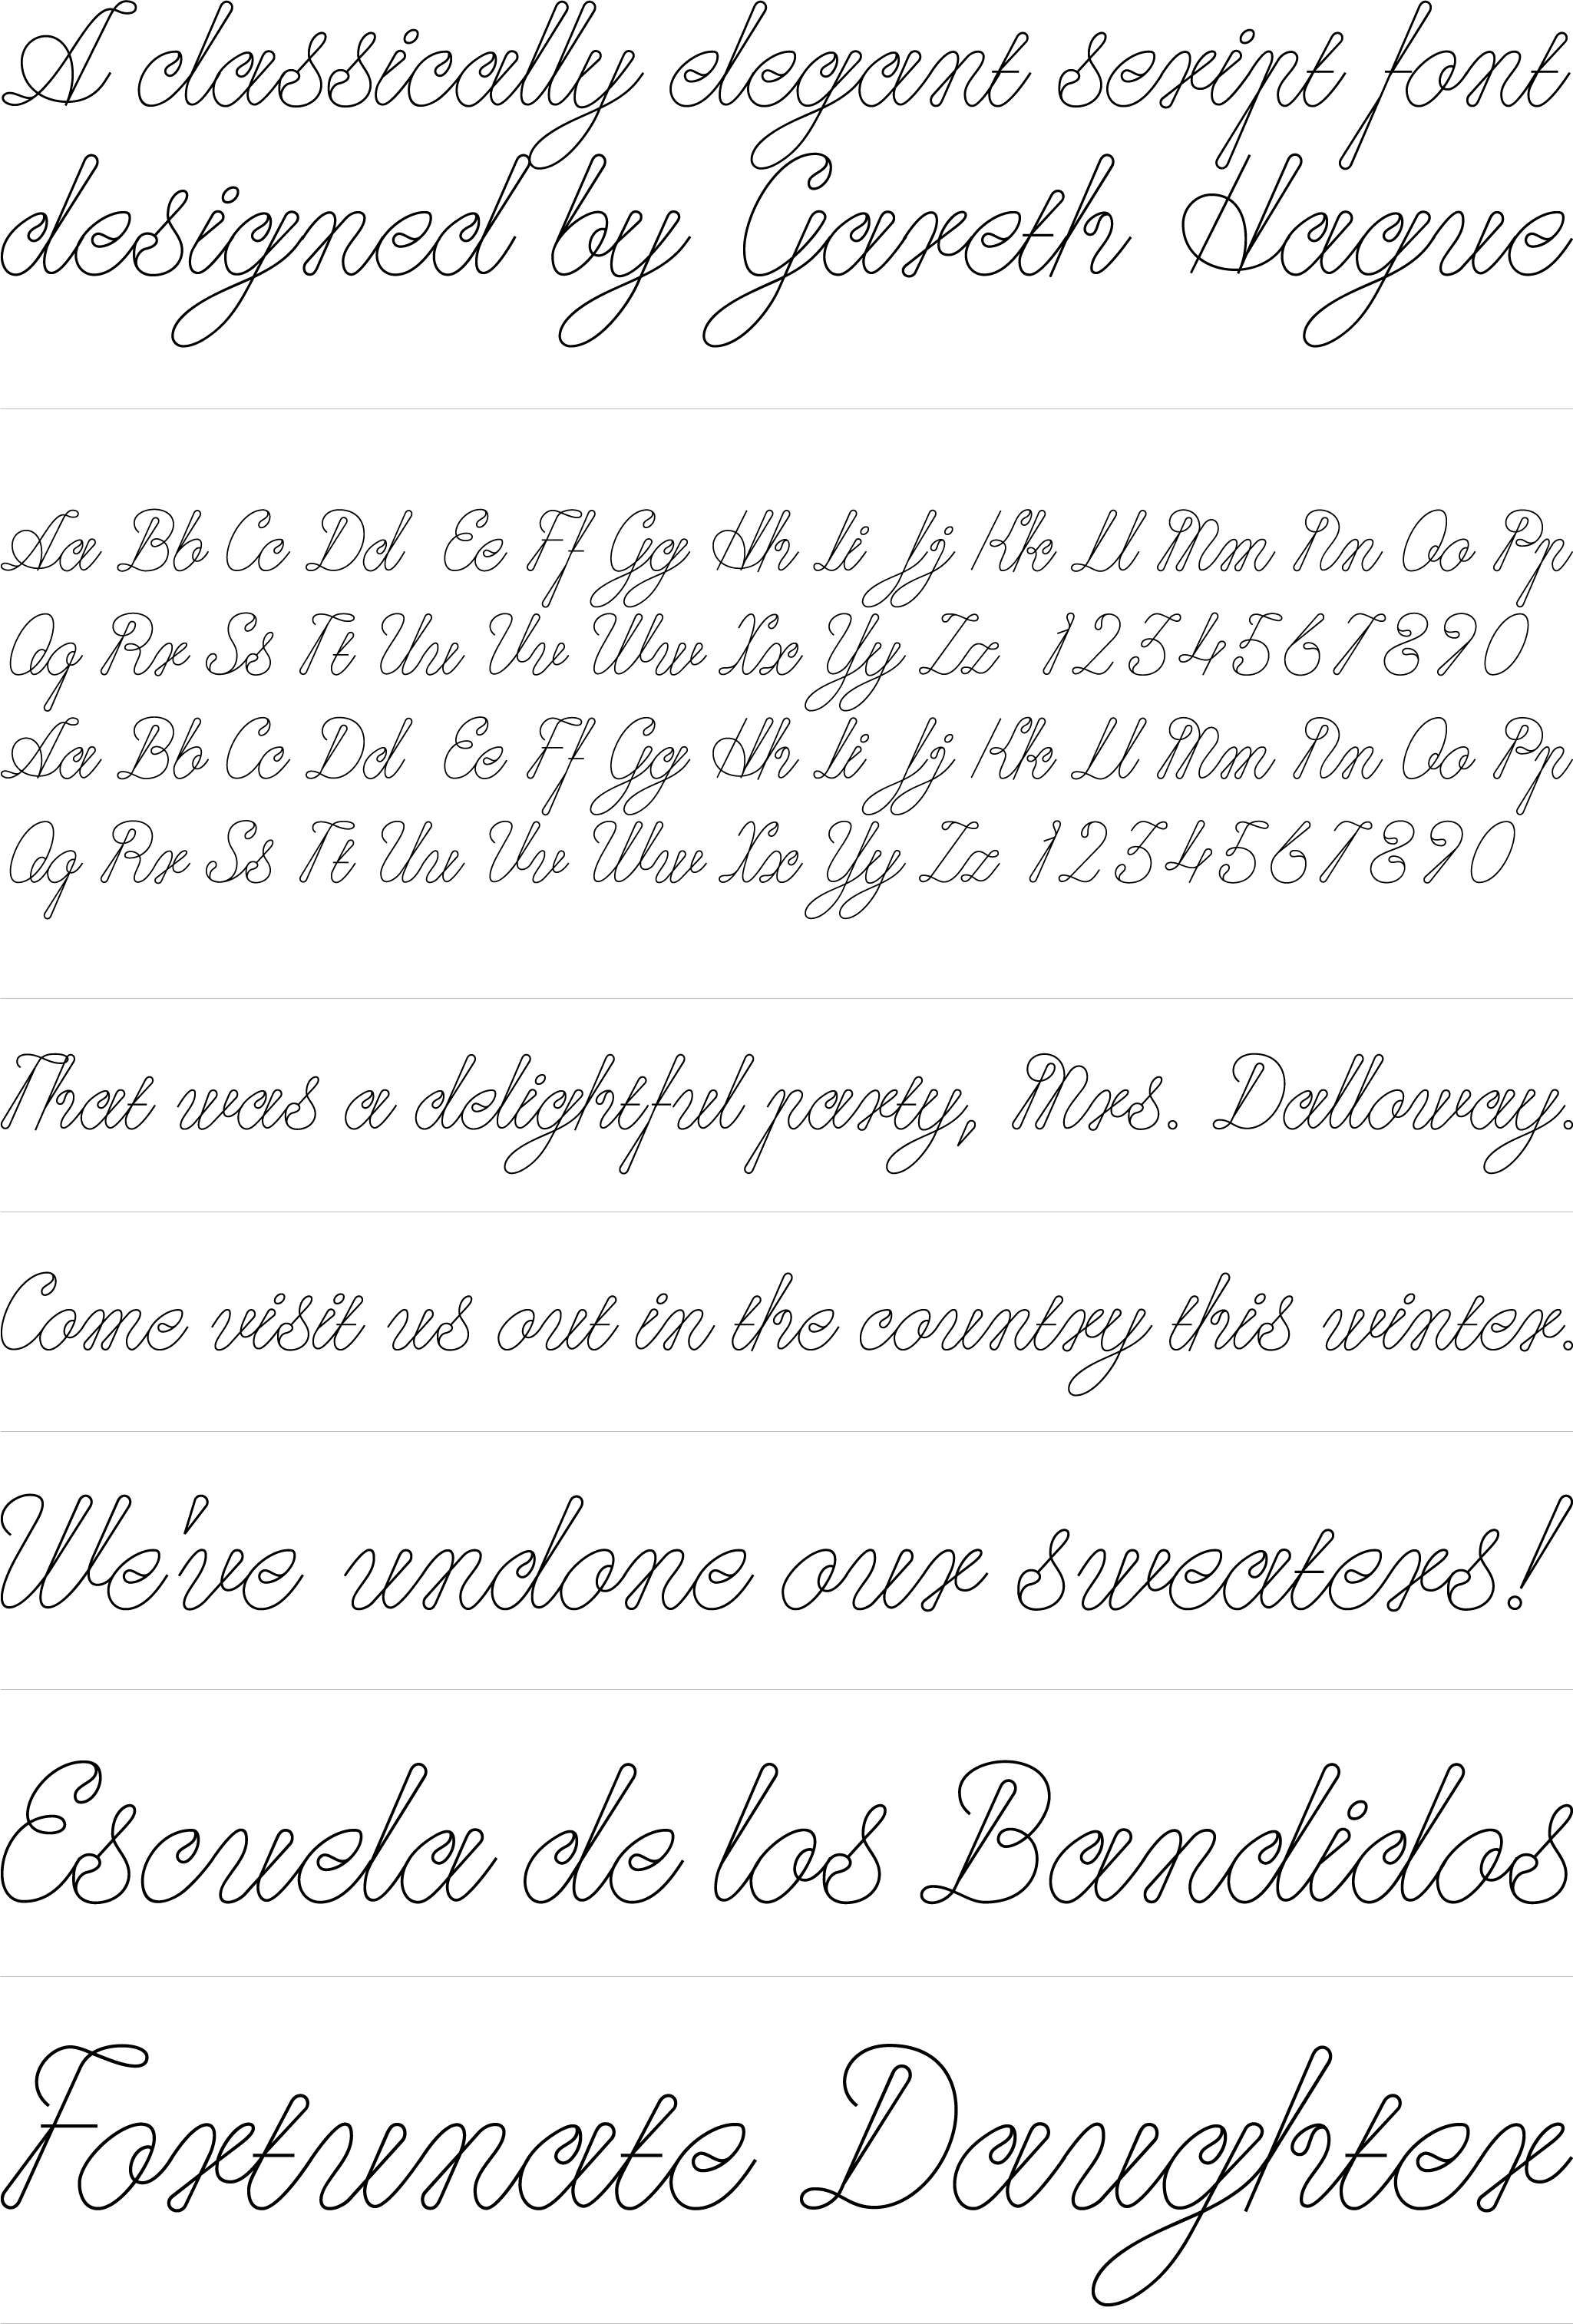 MM - Logo or 2-letter Code. Isometric 3d Font for Design. Letters